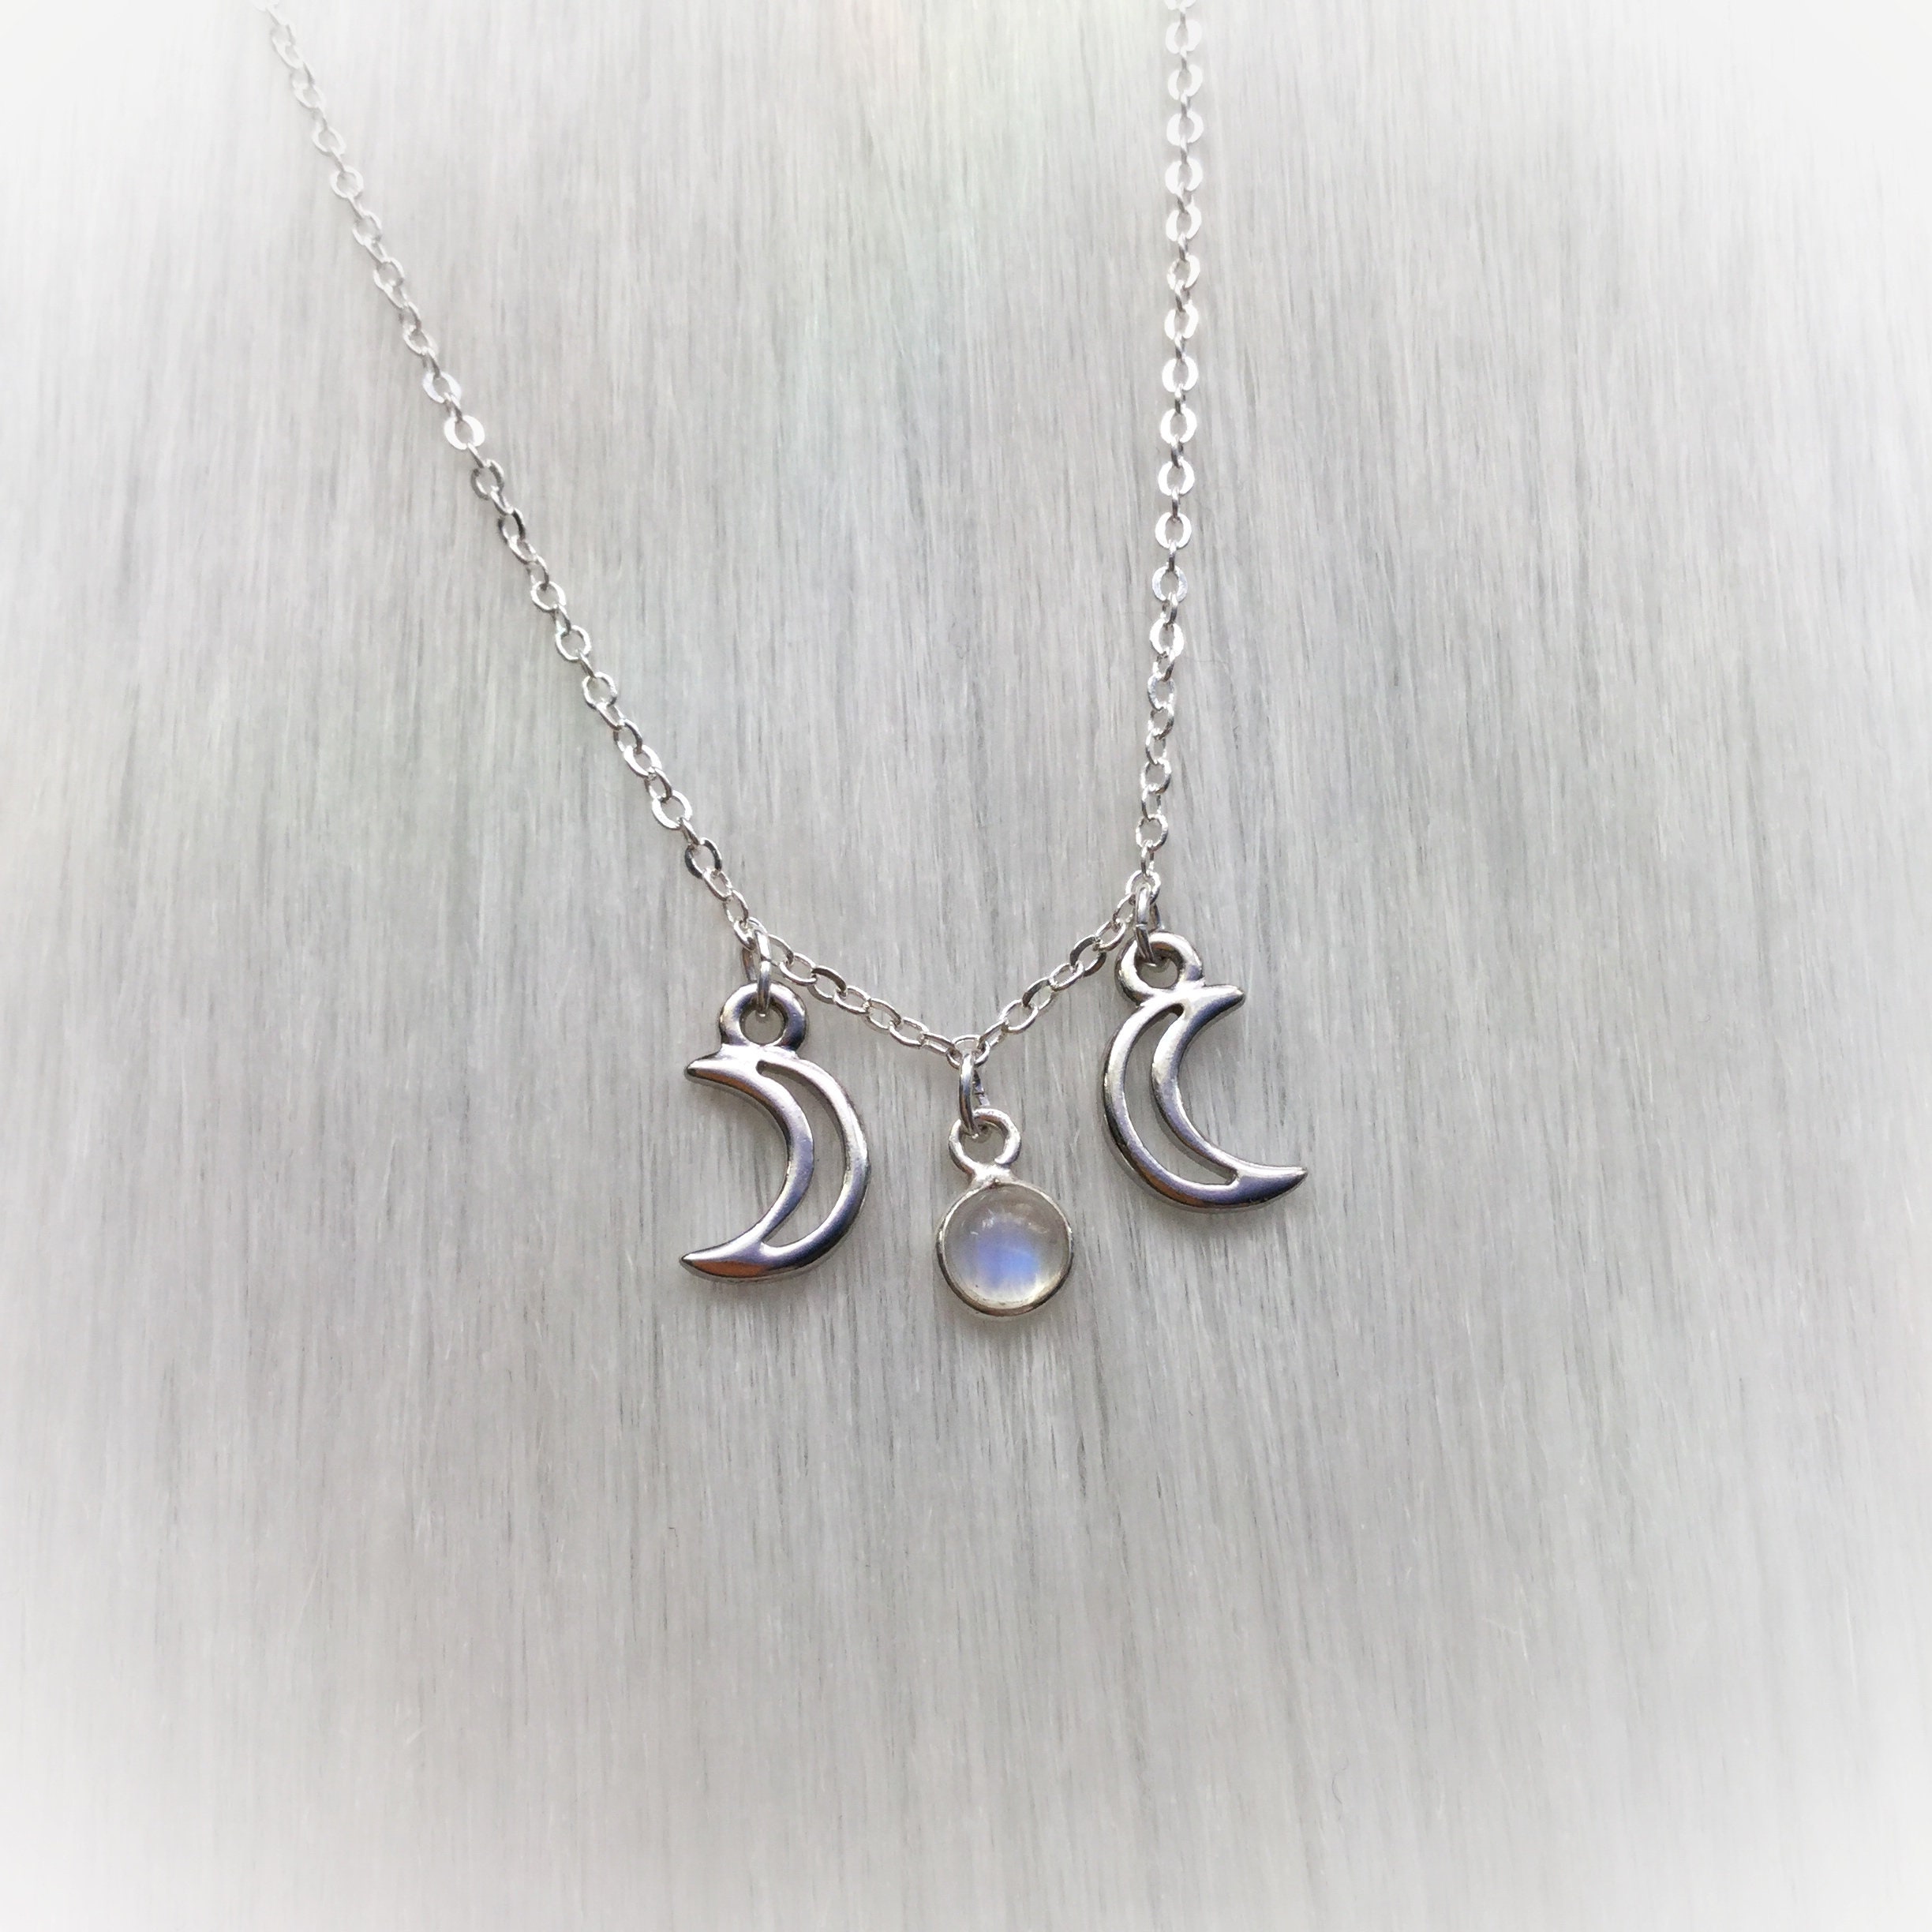 Dainty Rainbow Moonstone Triple Goddess Moon necklace with blue flash